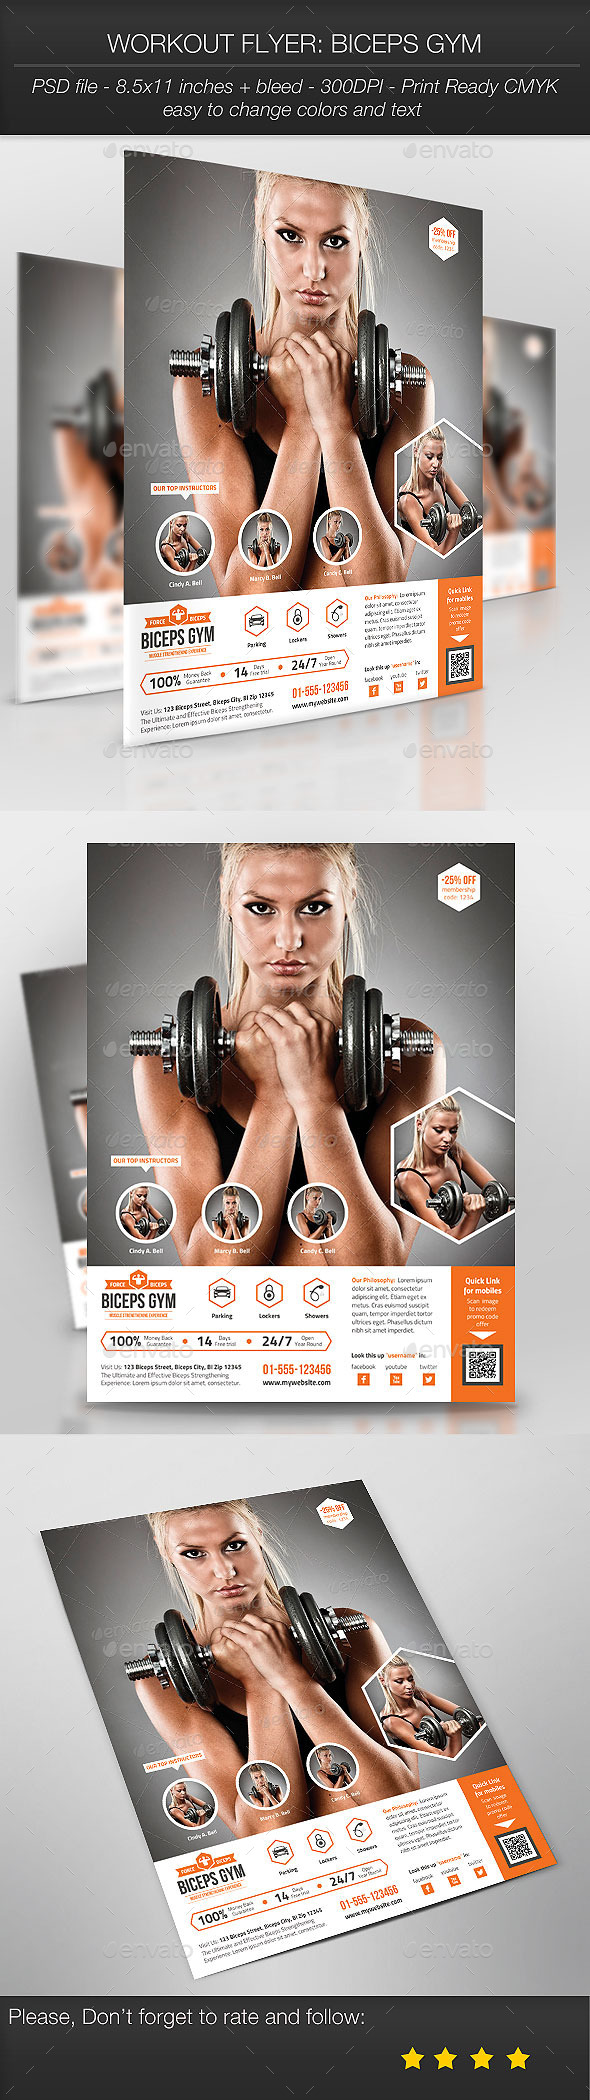 Workout Flyer: Biceps Gym